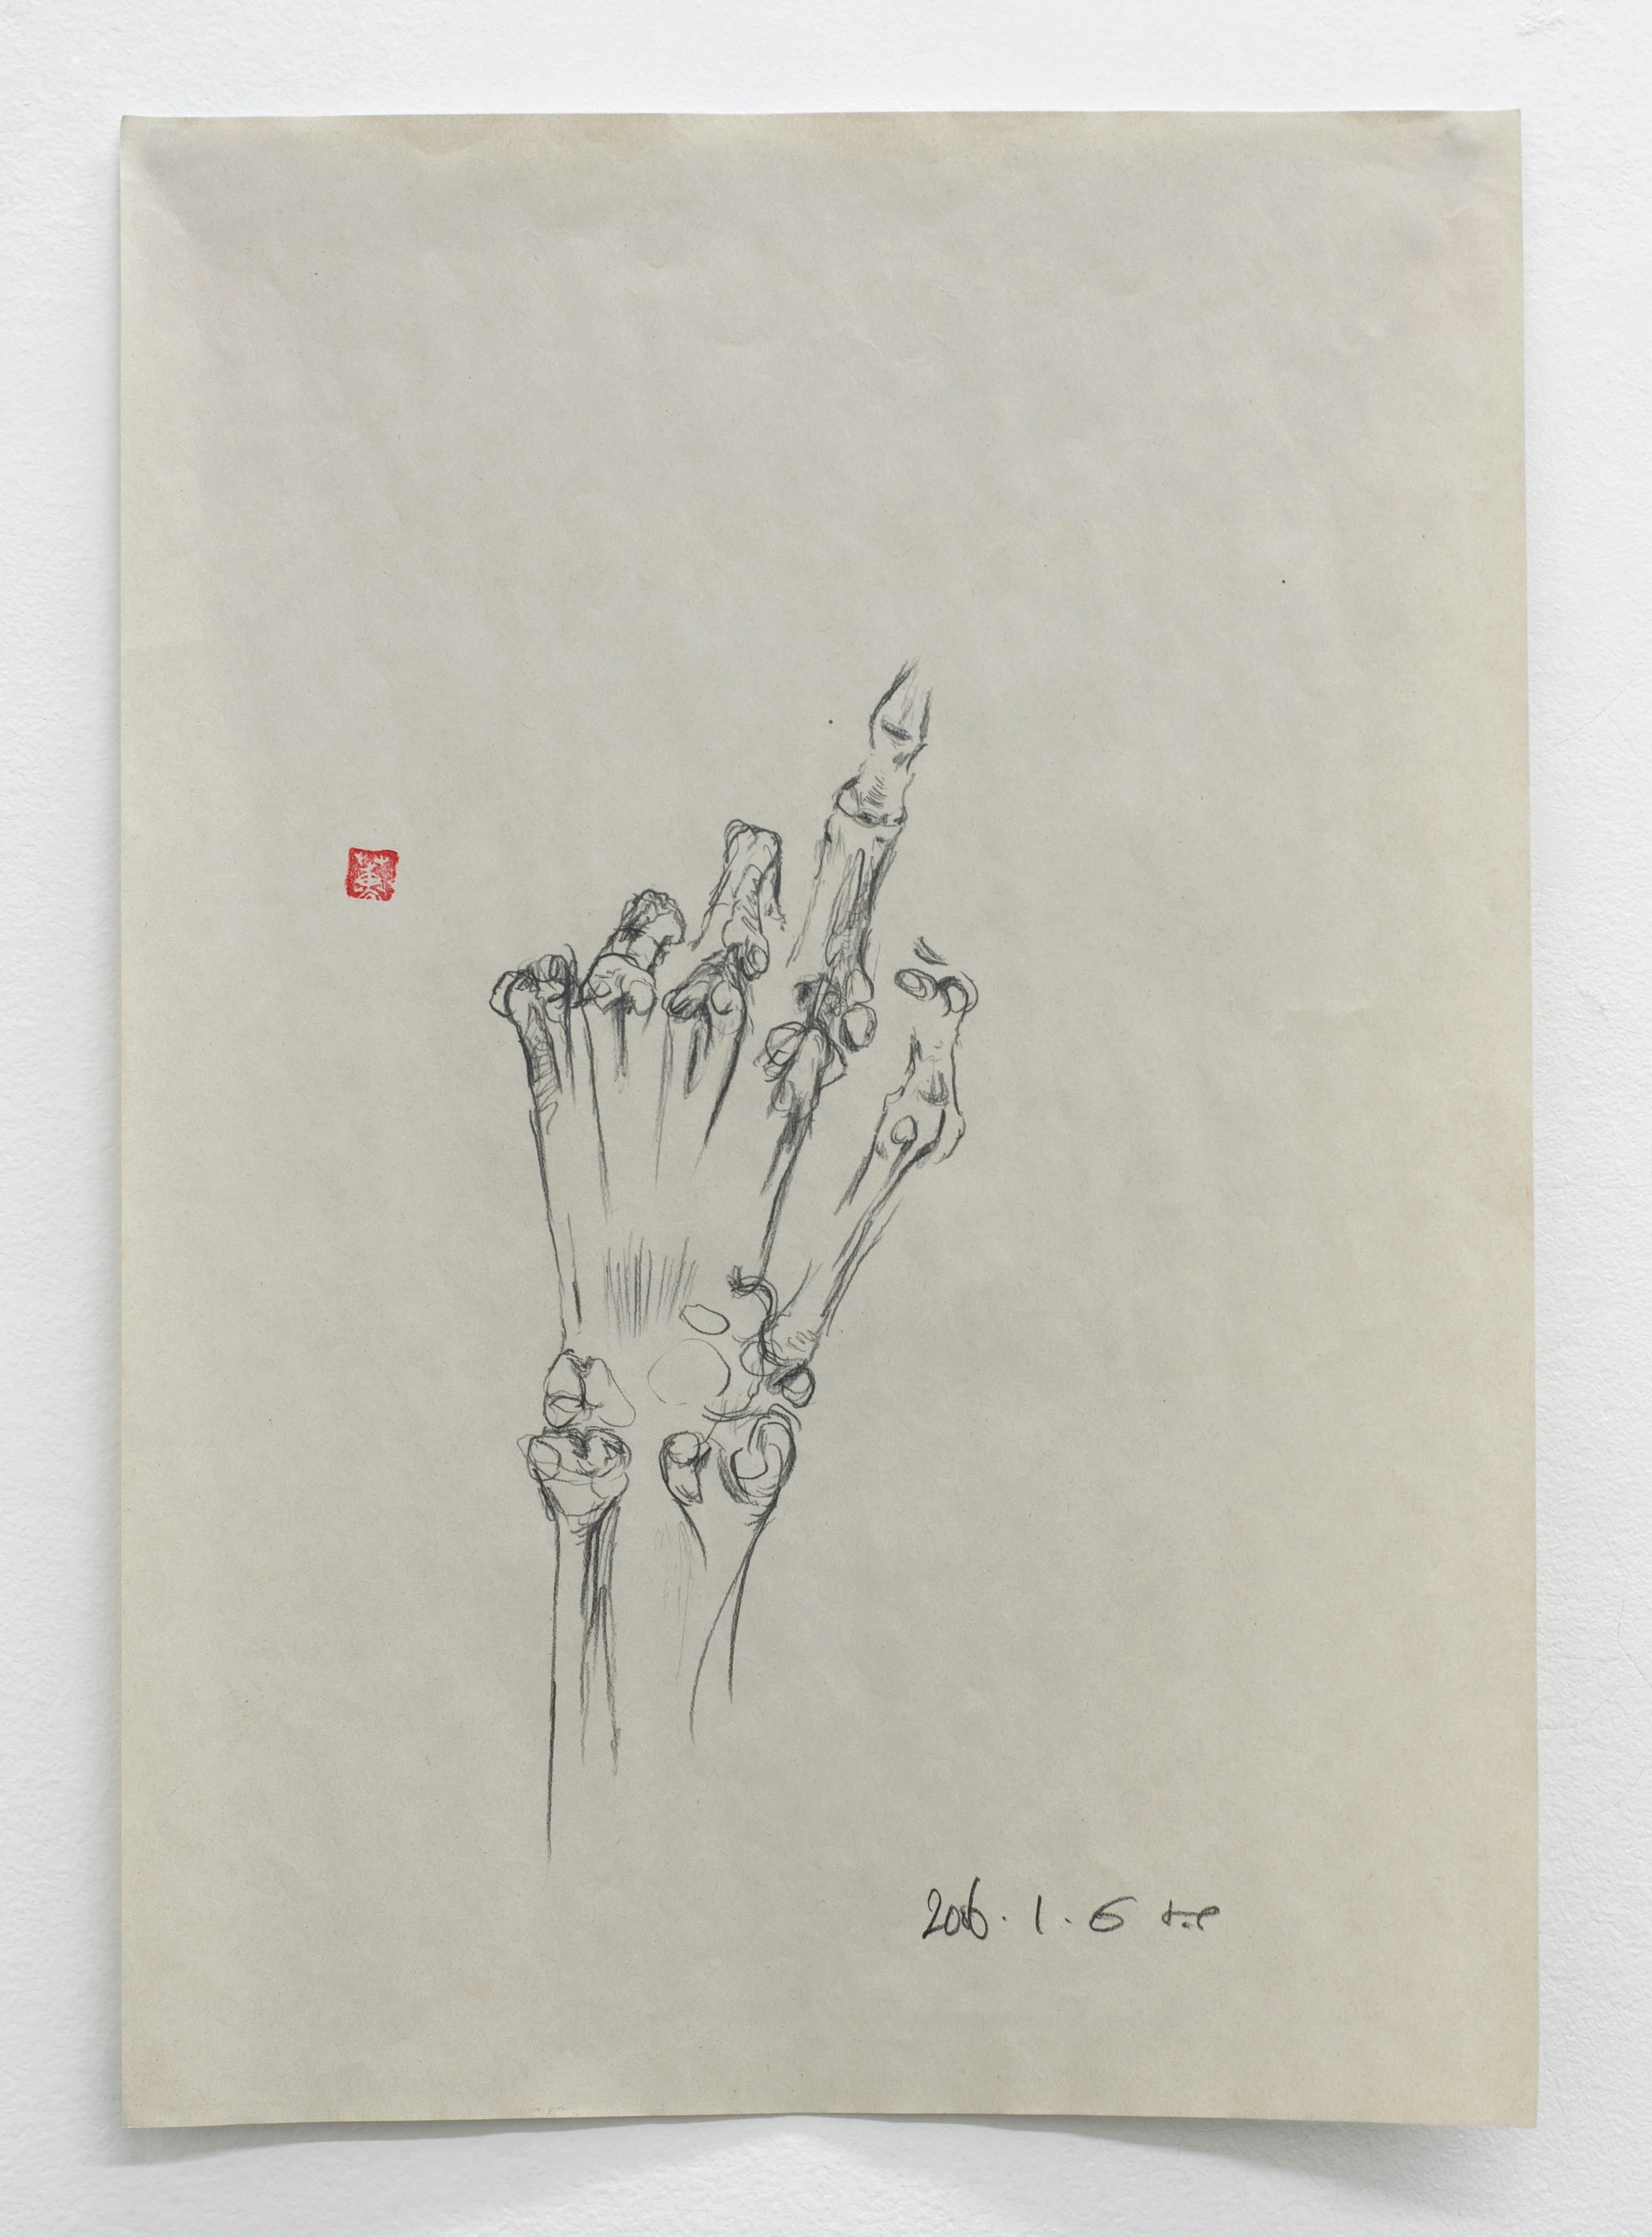 Hand Bones 2006.01.06 (2006)
Pencil on paper. 14.25 x 10.15 inches, 36.3 x 25.8 cm